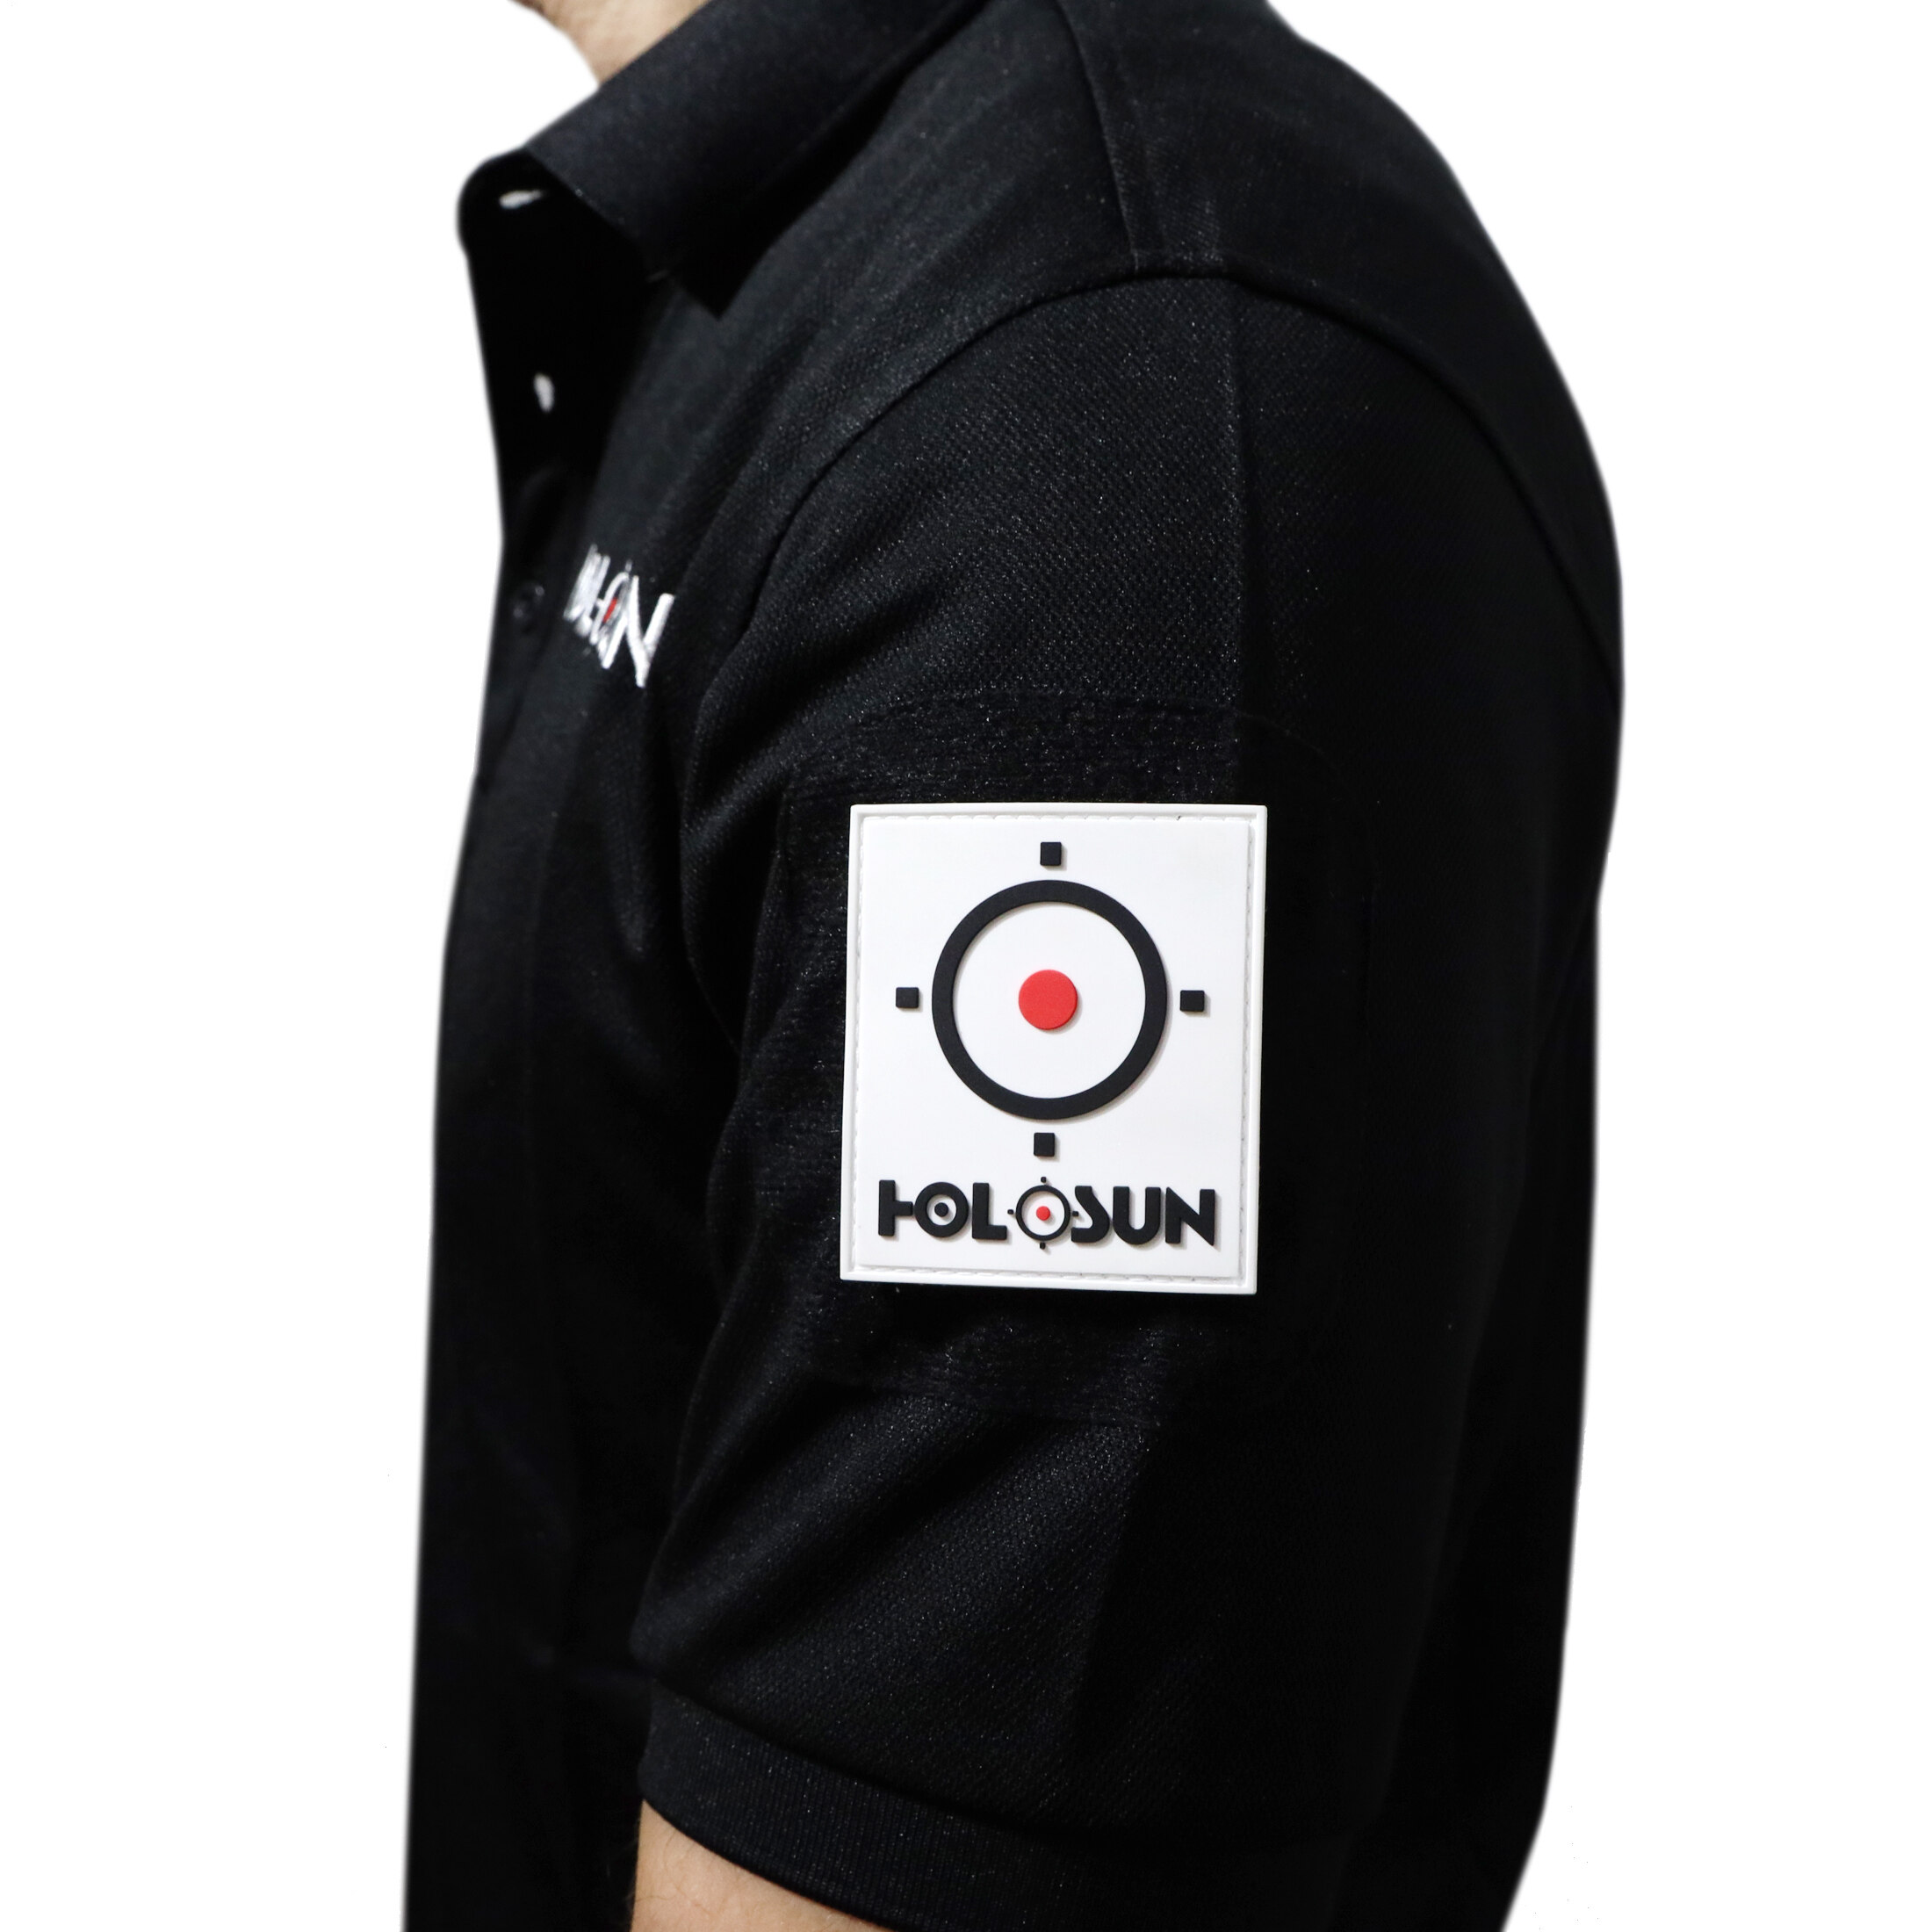 Голосун Merchandise HOLOSUN-KLETT-PATCH-SQUARE-WHITE